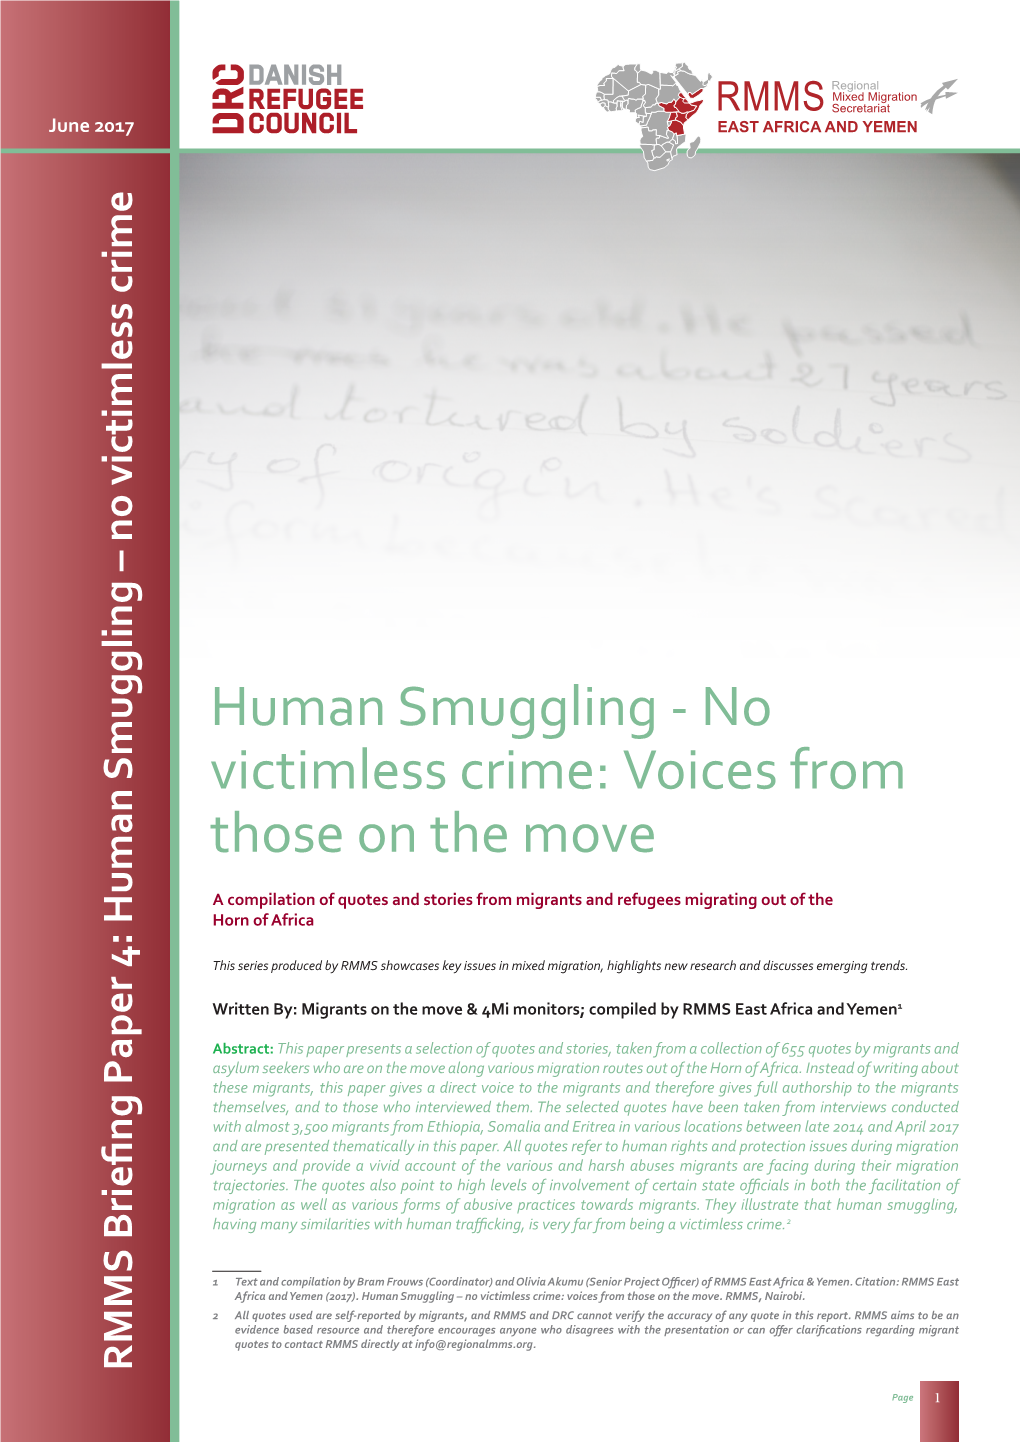 Human Smuggling